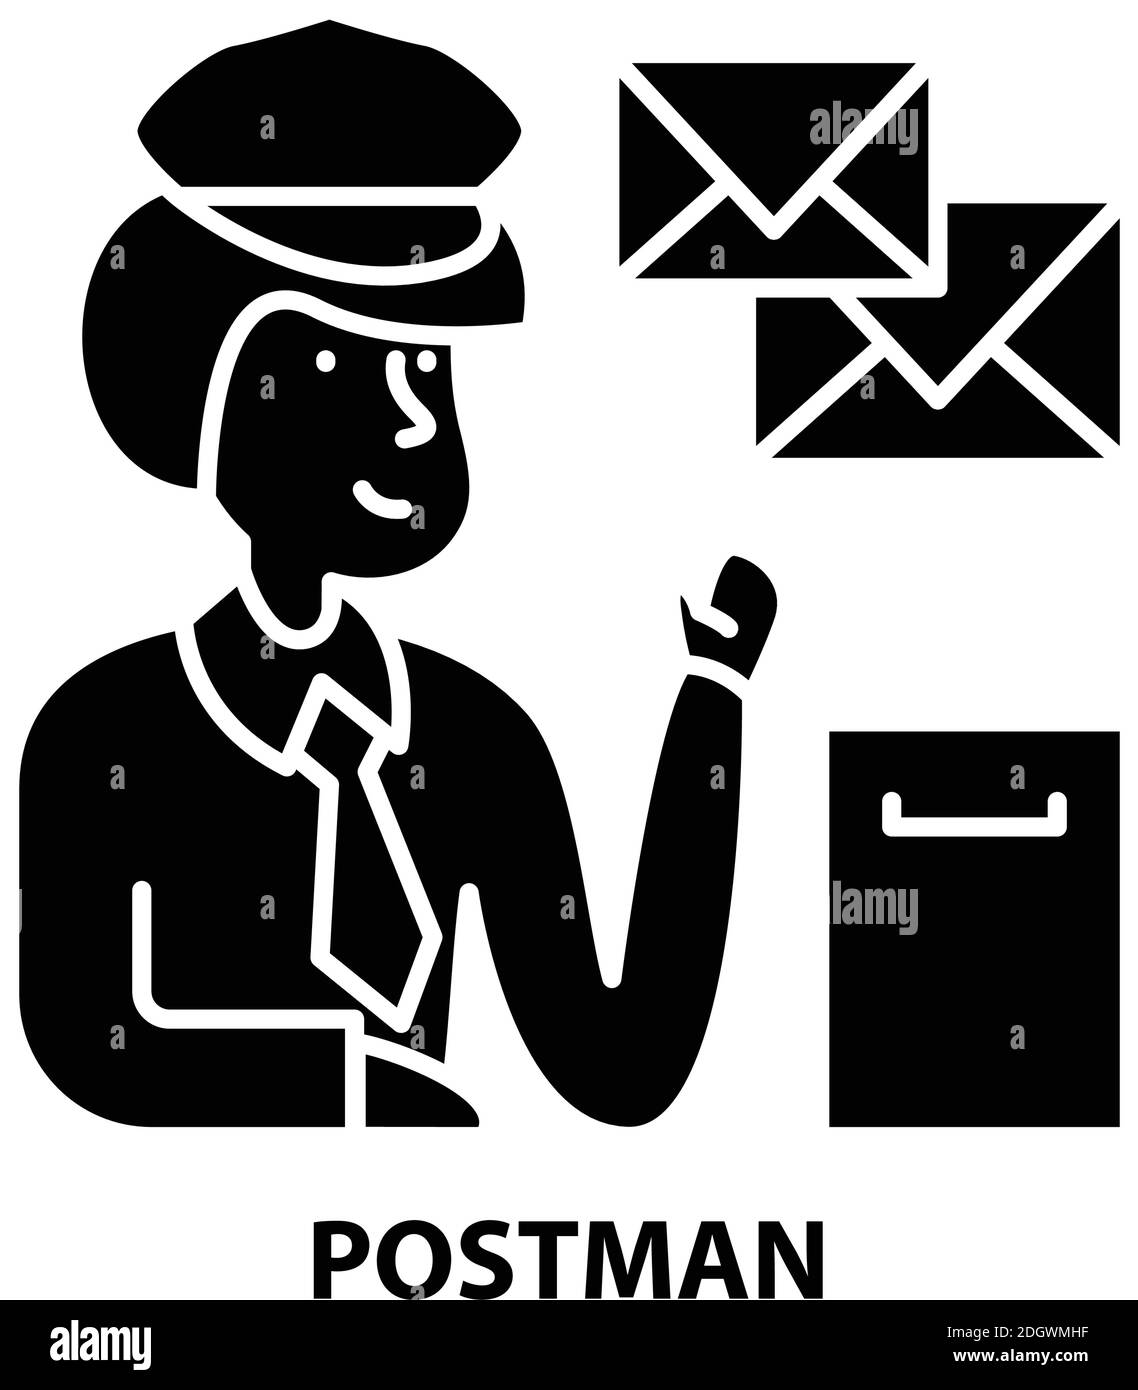 postman icon, black vector sign with editable strokes, concept illustration Stock Vector